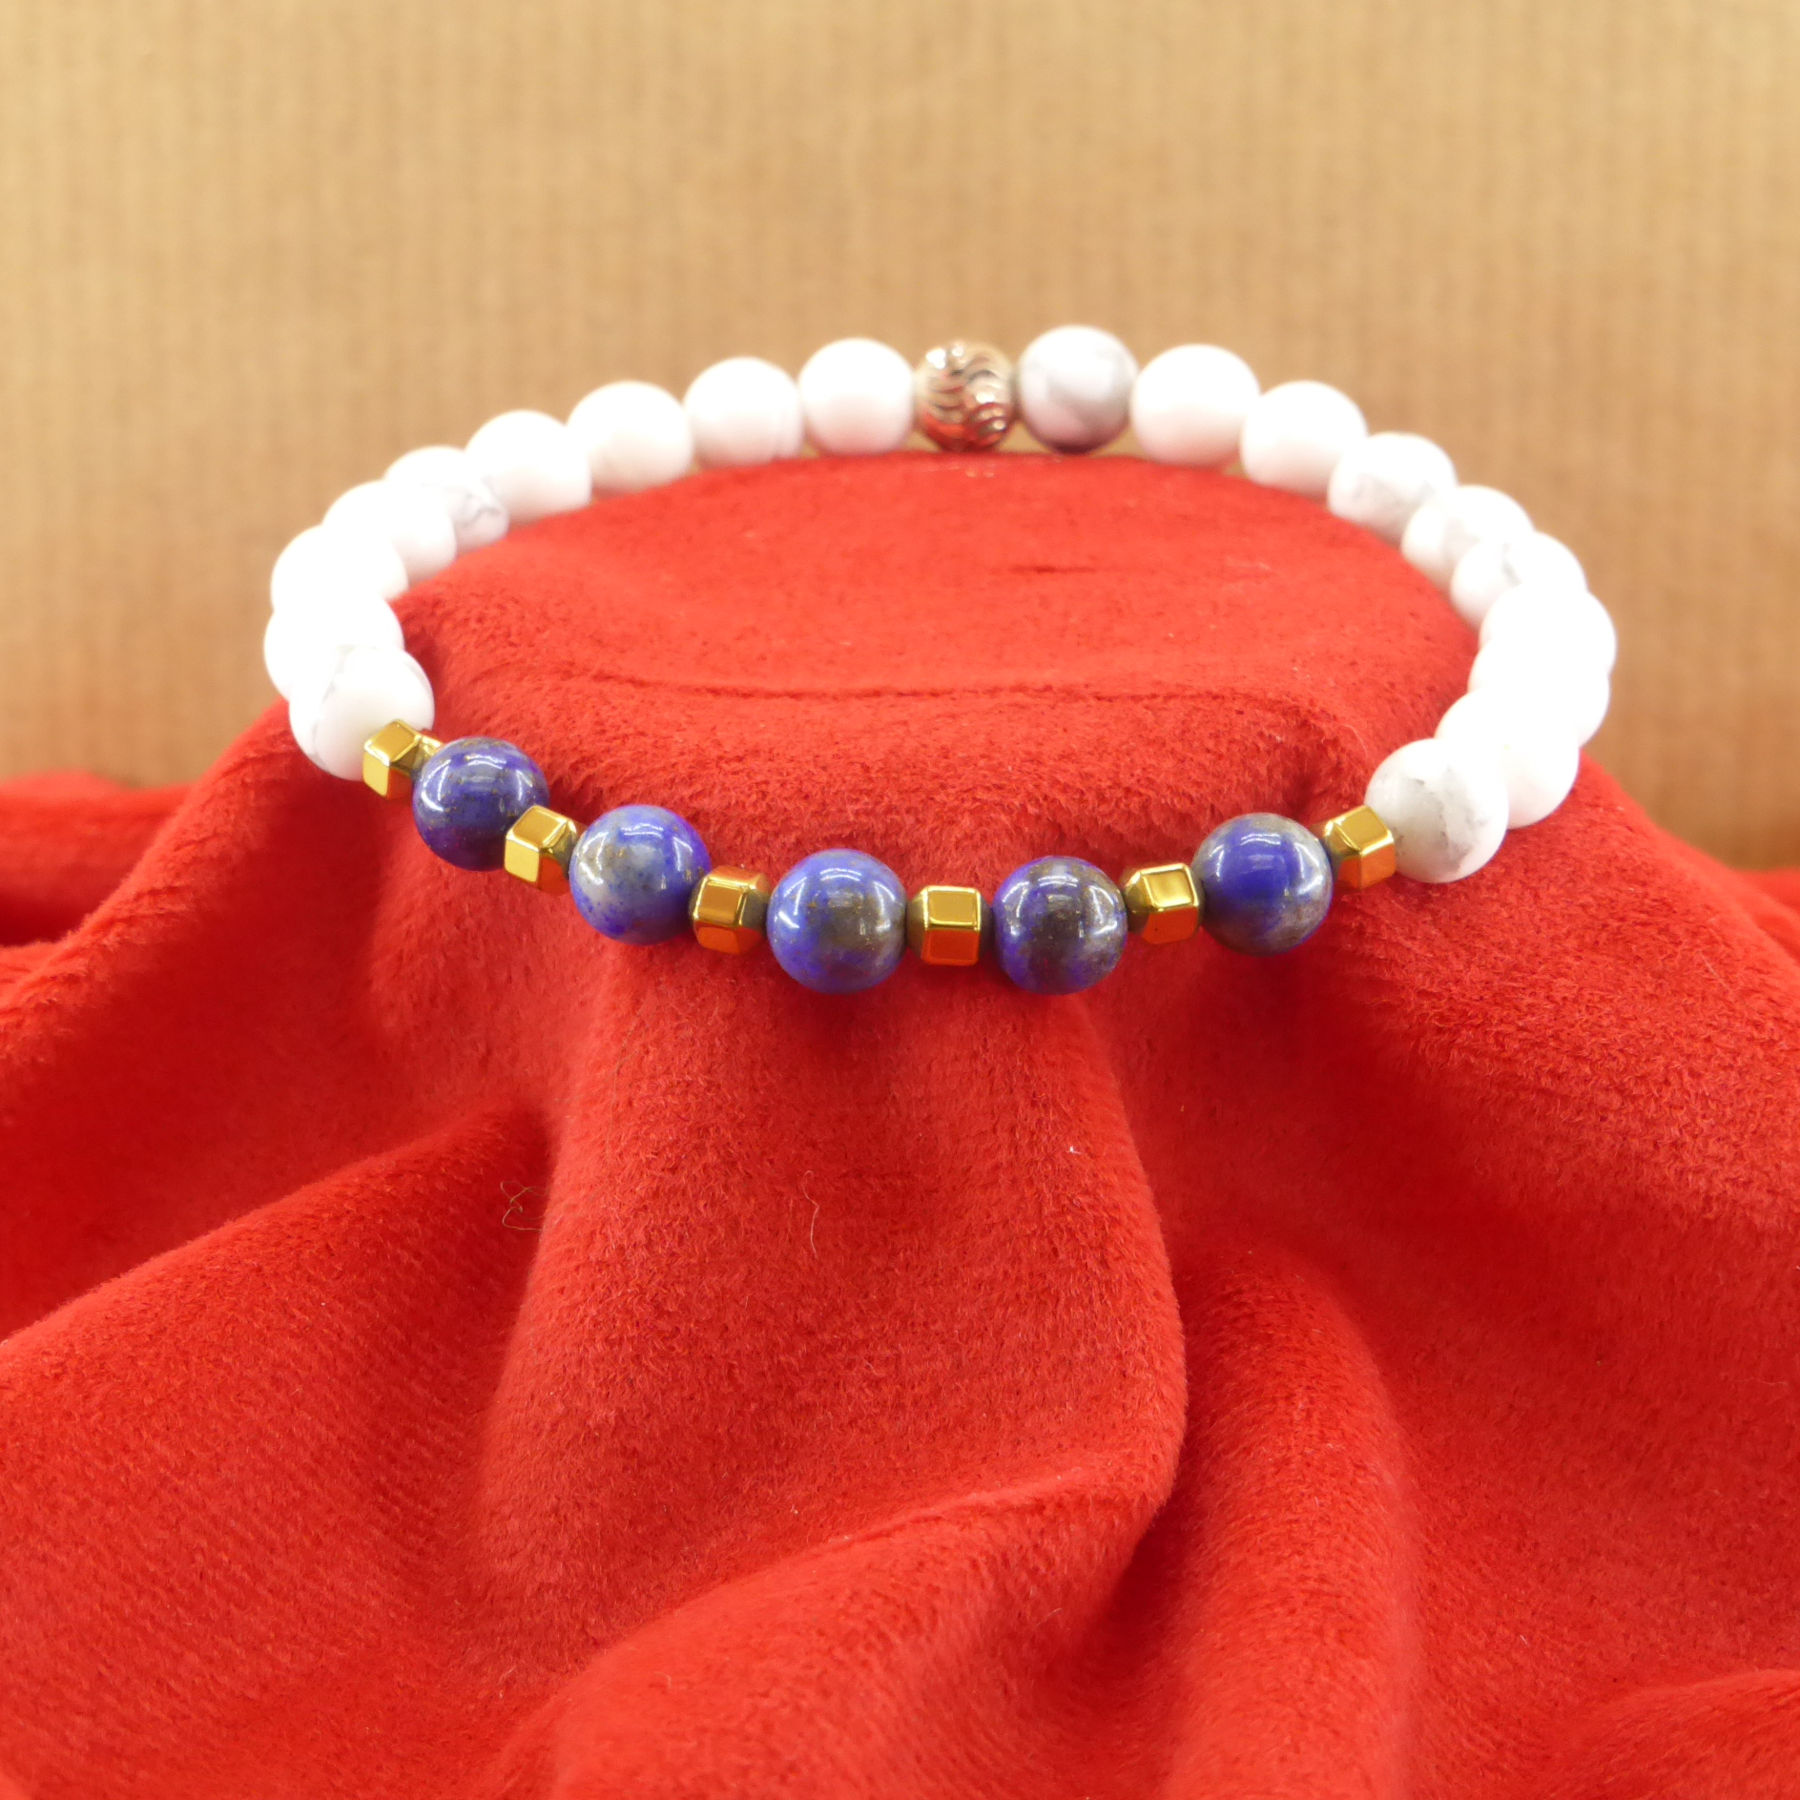 White jasper and Lapis Lazuli bracelet